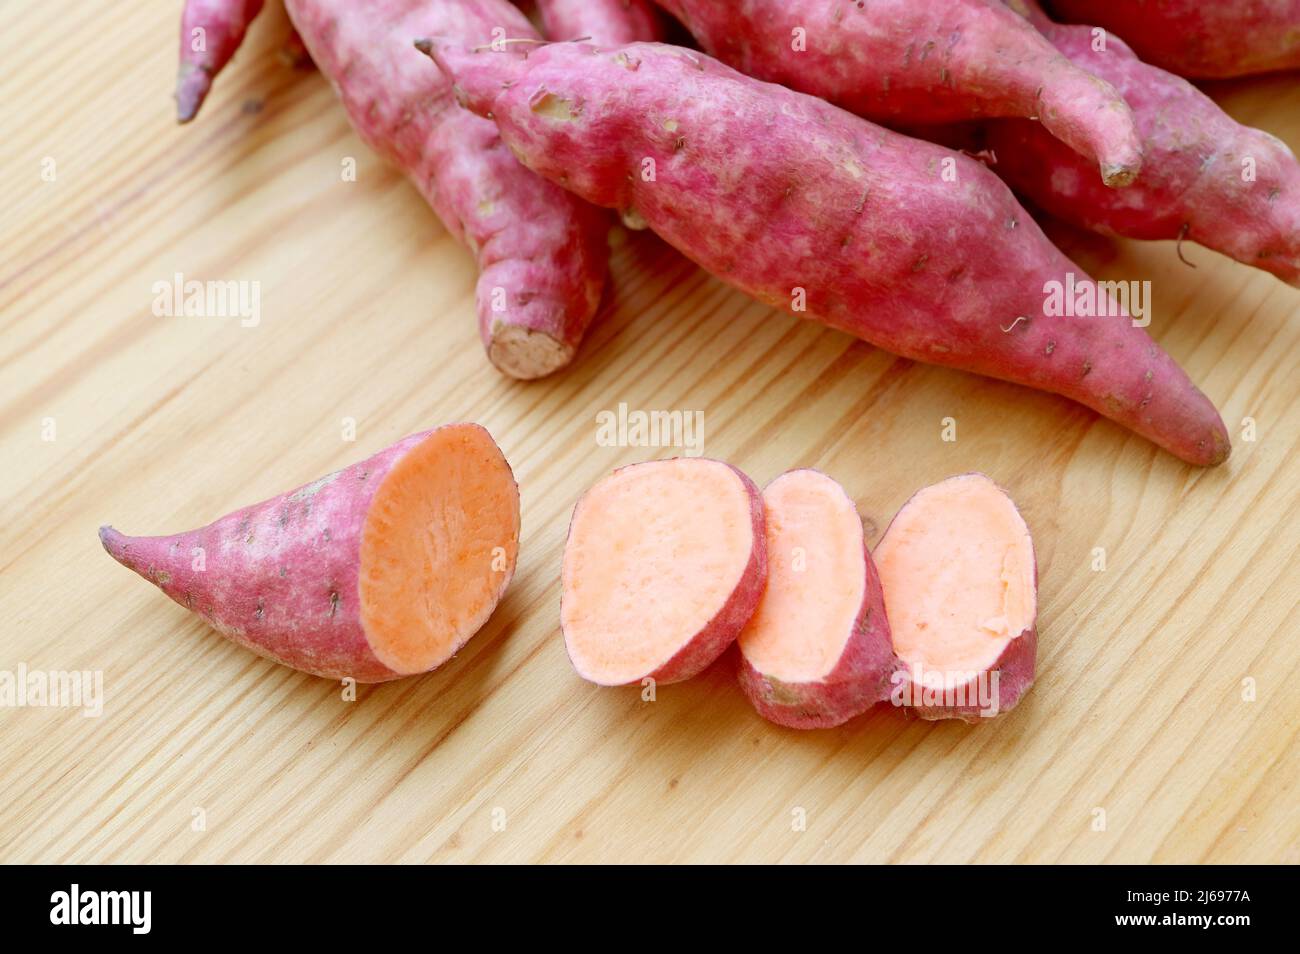 Closeup of Cut Raw Sweet Potato Showing Its Pale Orange Flesh Stock Photo